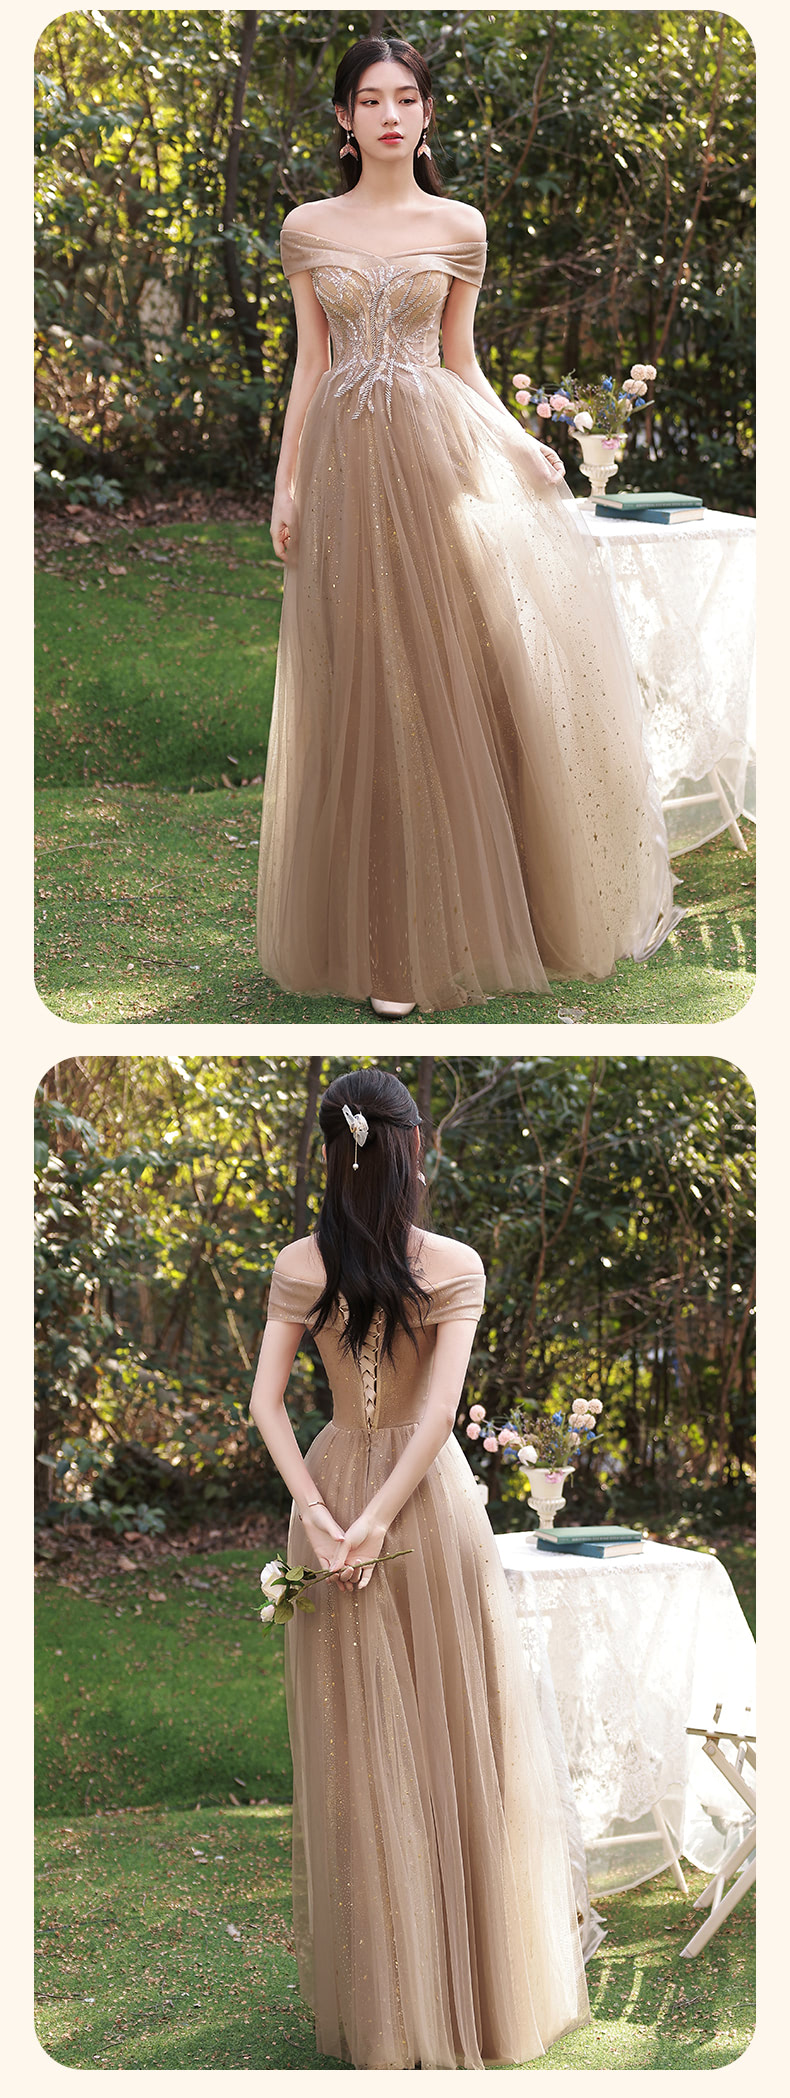 Chiffon-Floor-Length-Bridesmaids-Wedding-Prom-Dress-Ball-Gown24.jpg